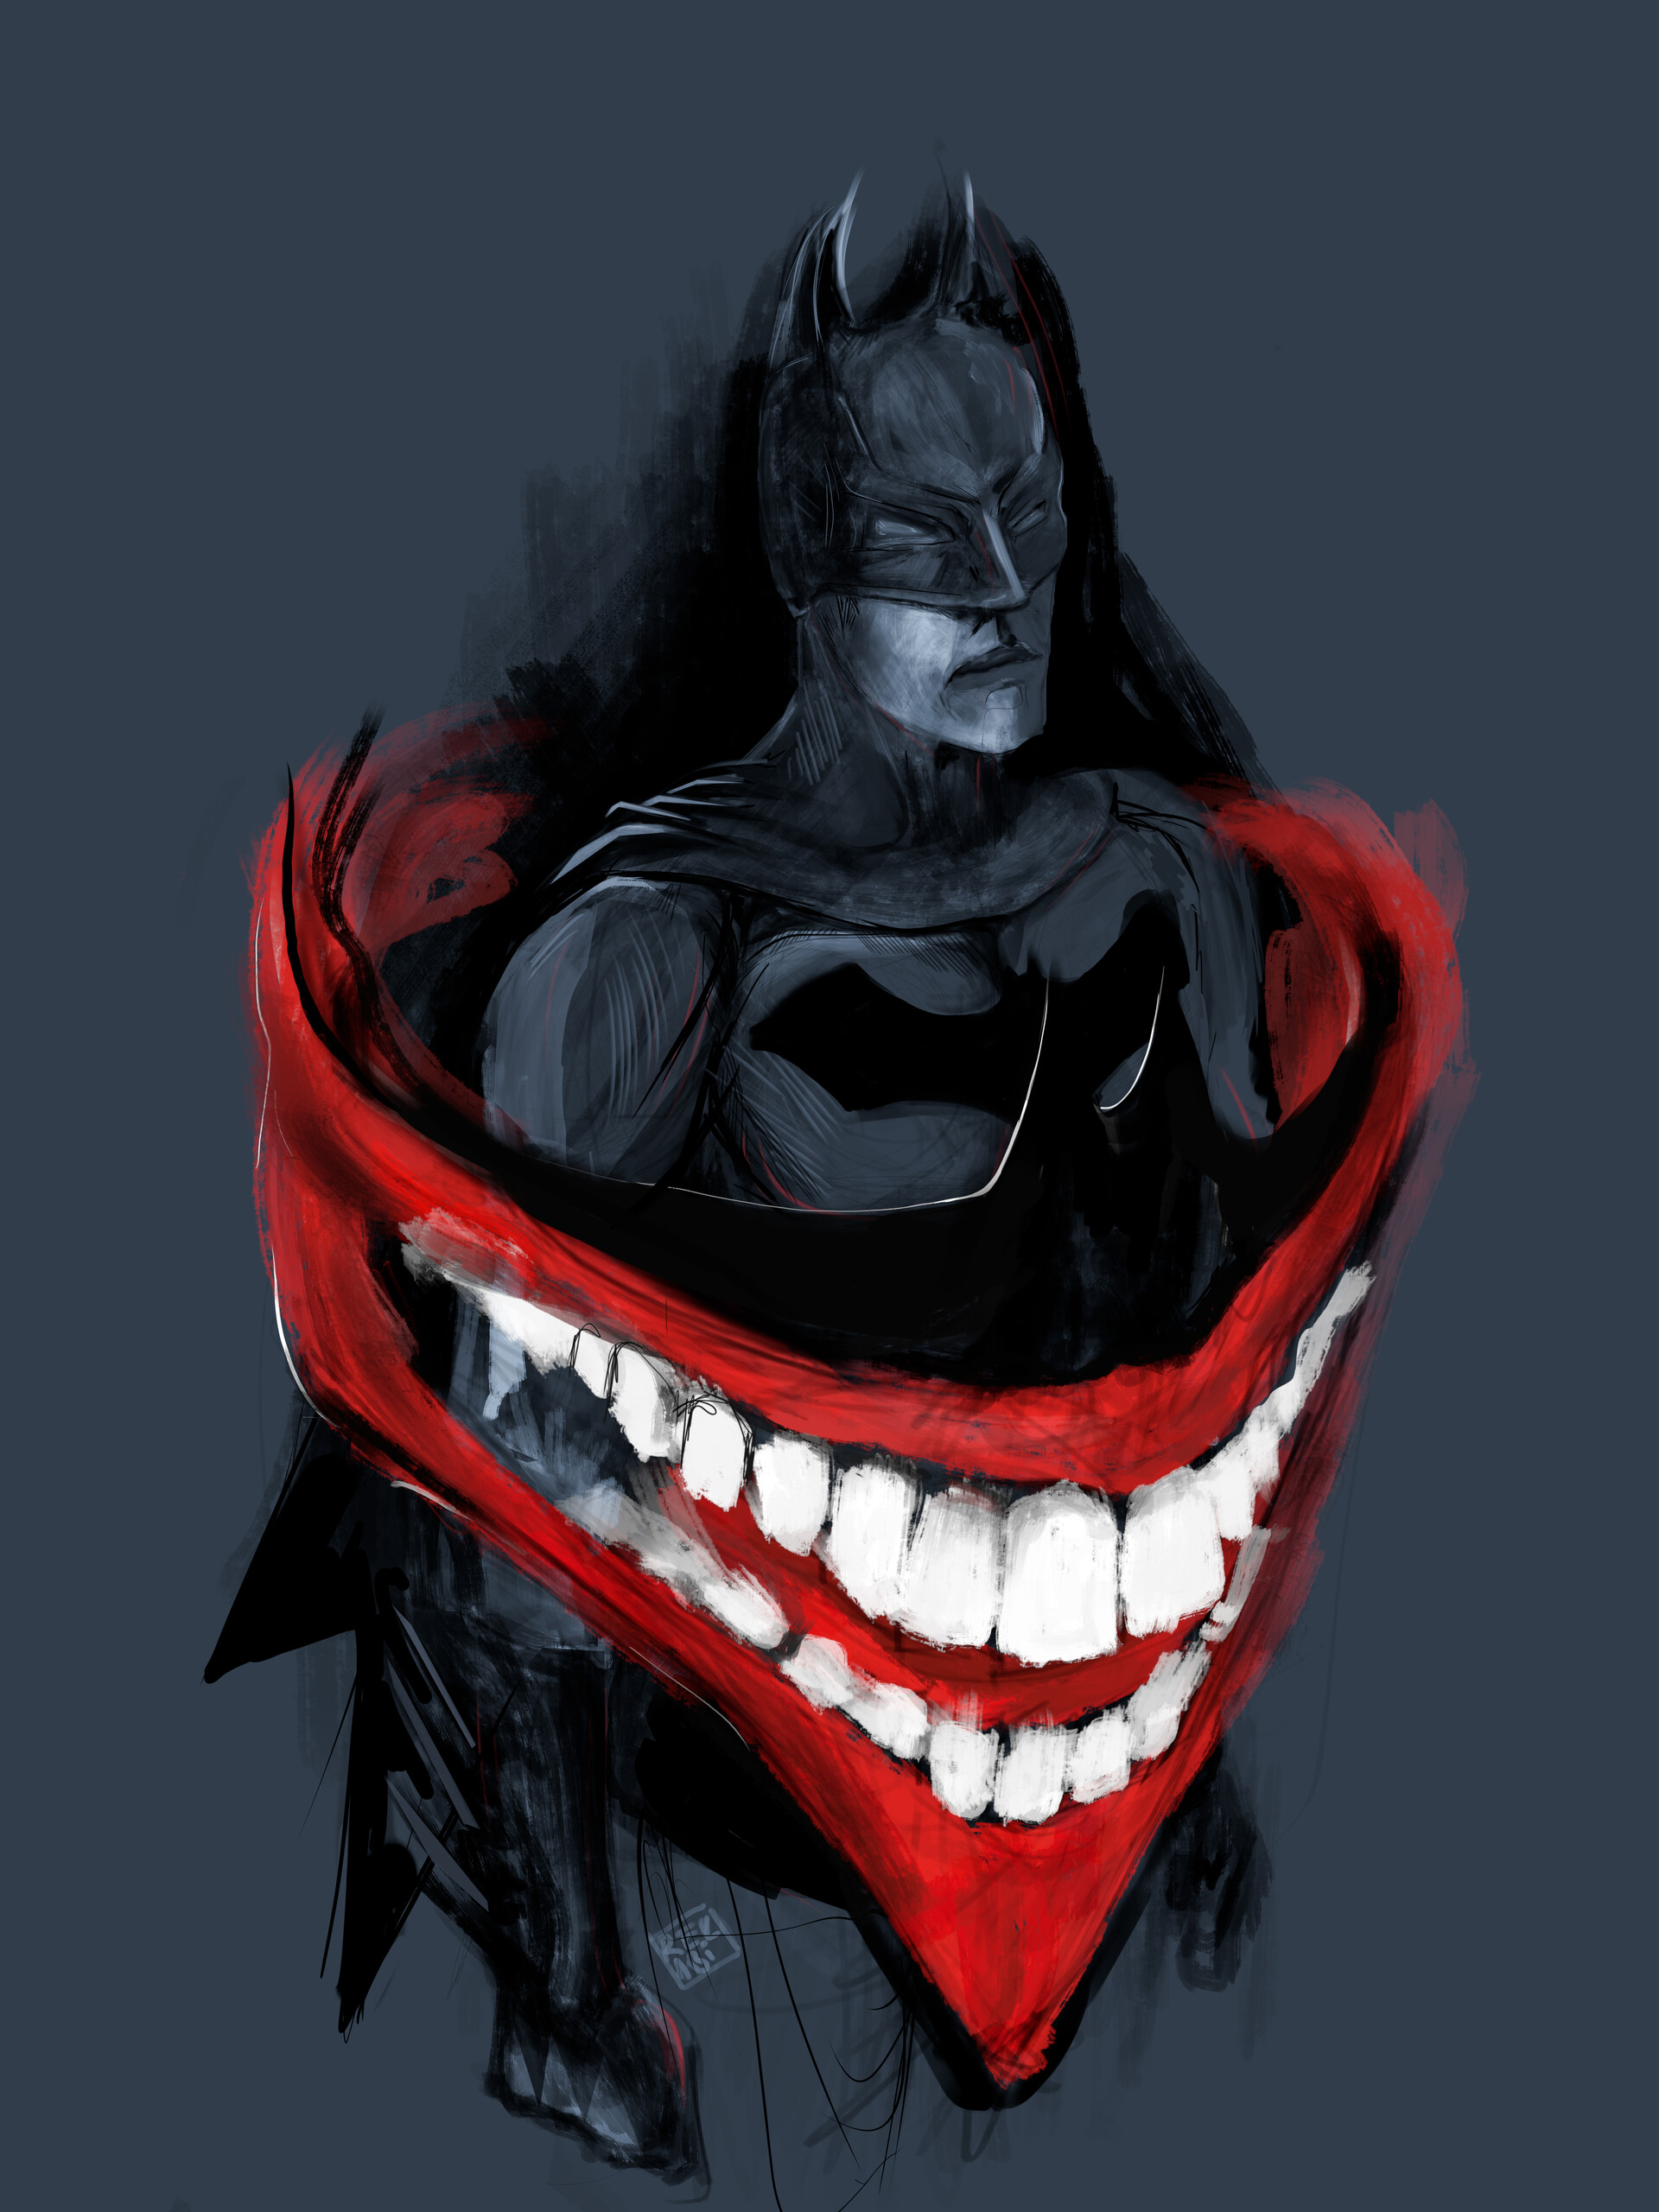 ArtStation - Batman-Joker Dijital painting